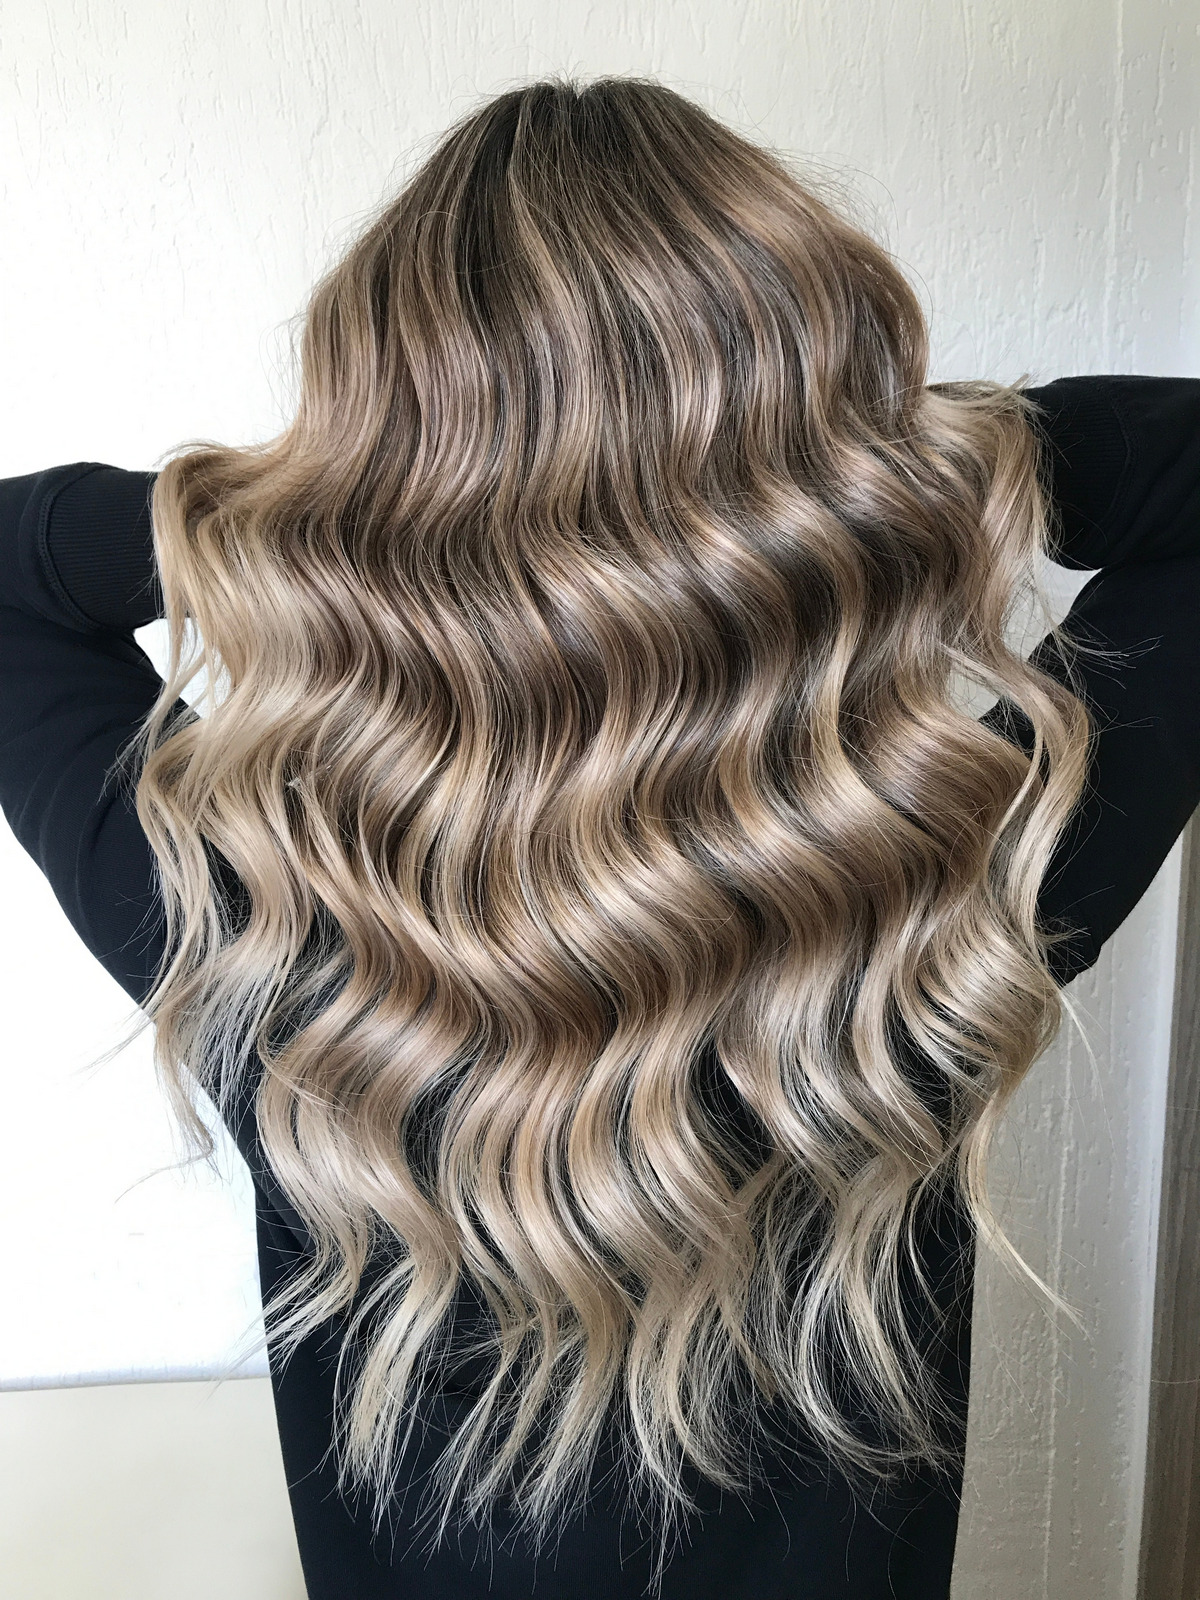 Long blonde hair with balayage